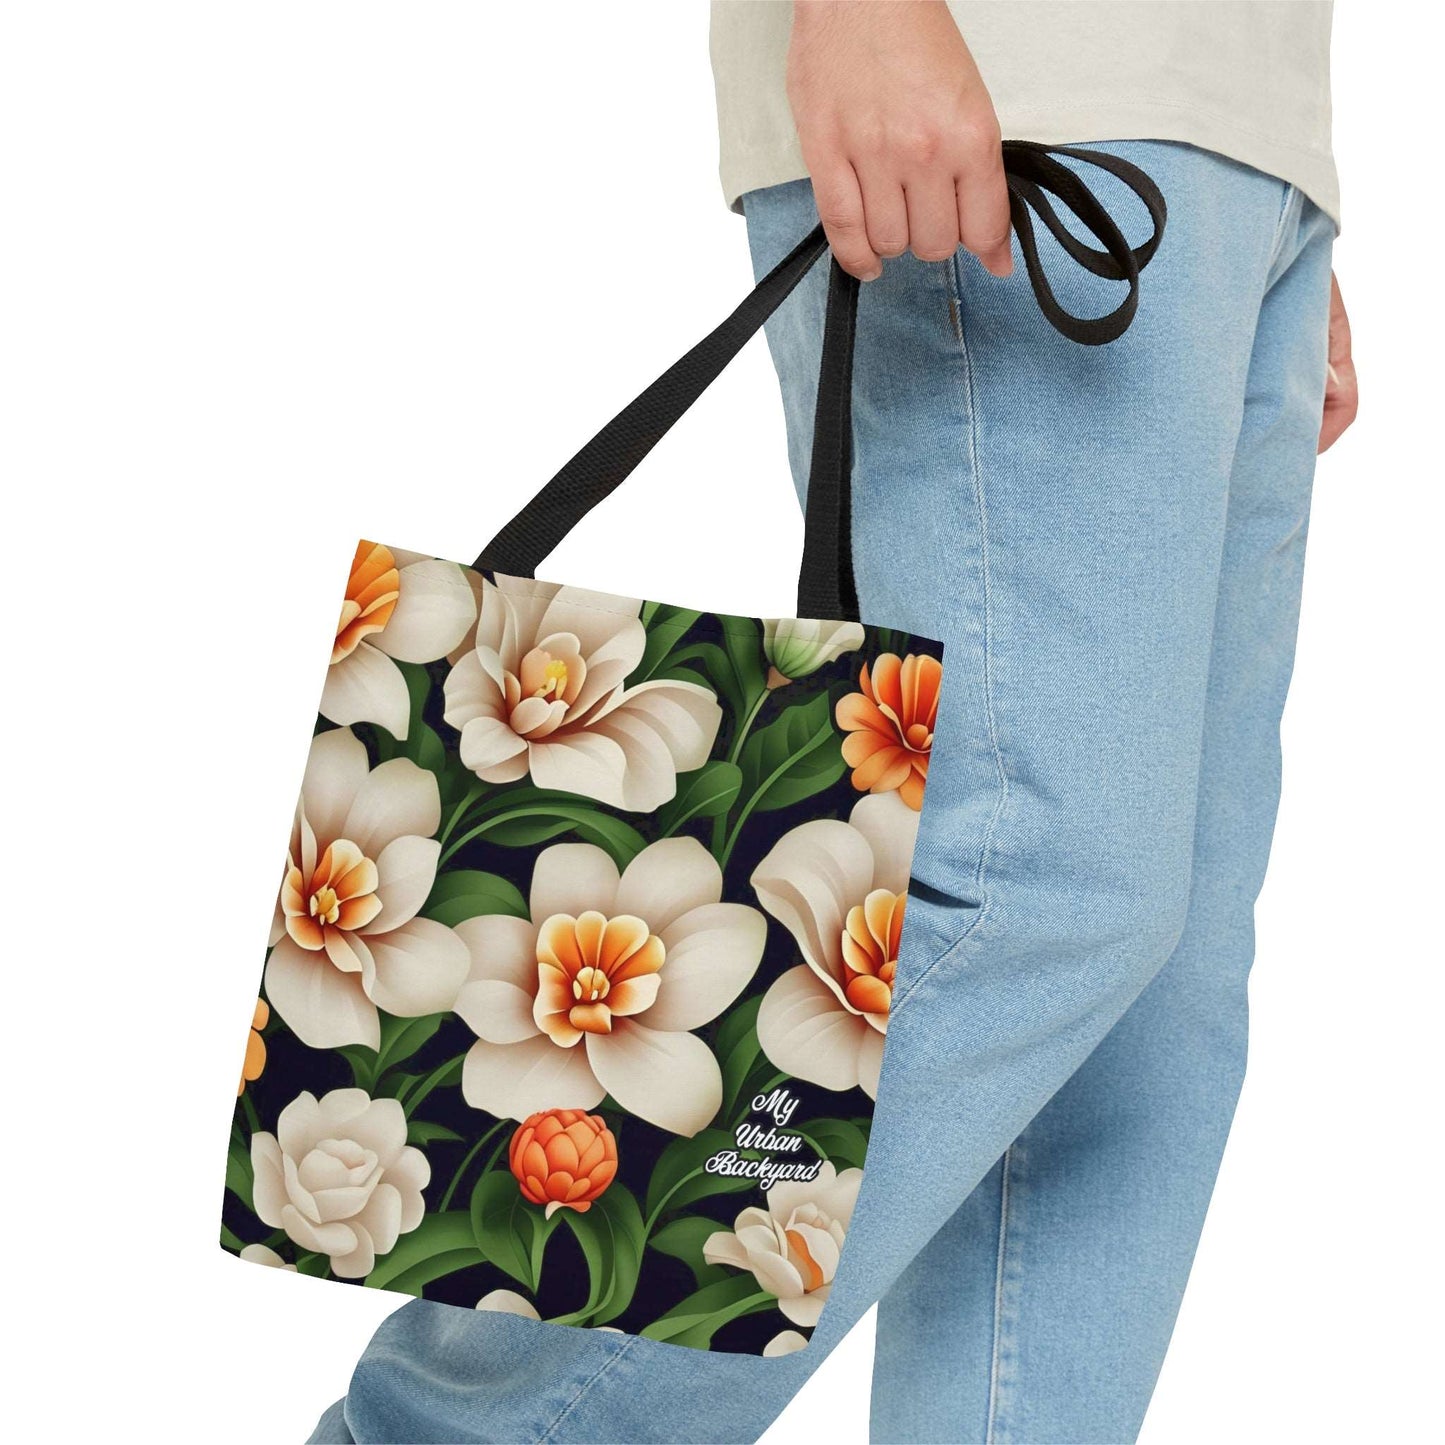 Everyday Tote Bag w Cotton Handles, Reusable Shoulder Bag, Pretty Flowers